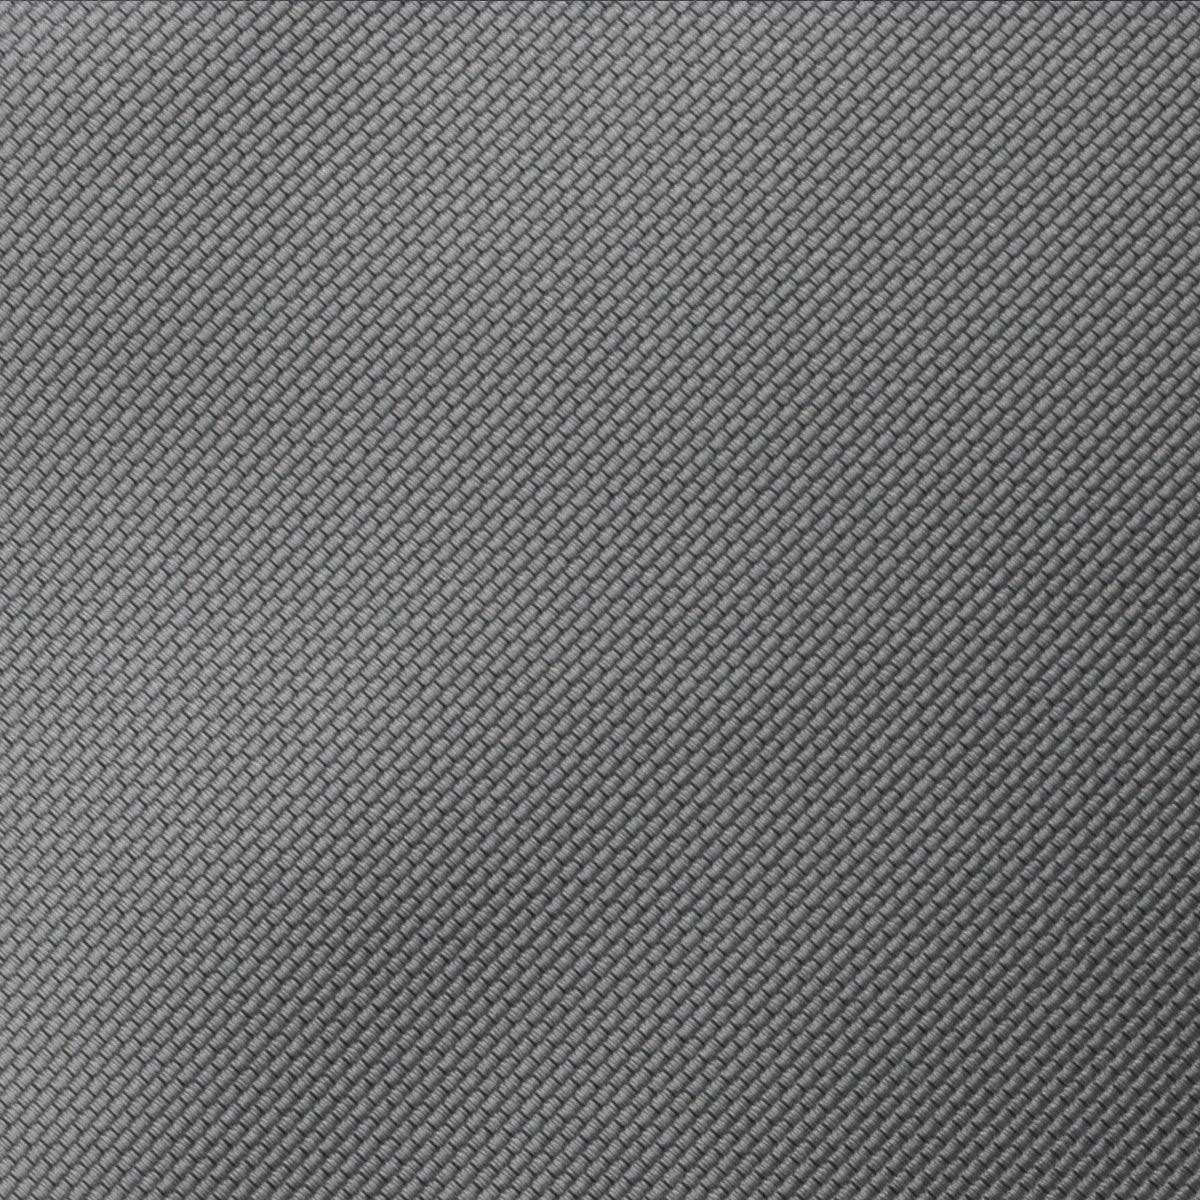 Mercury Grey Weave Bow Tie Fabric